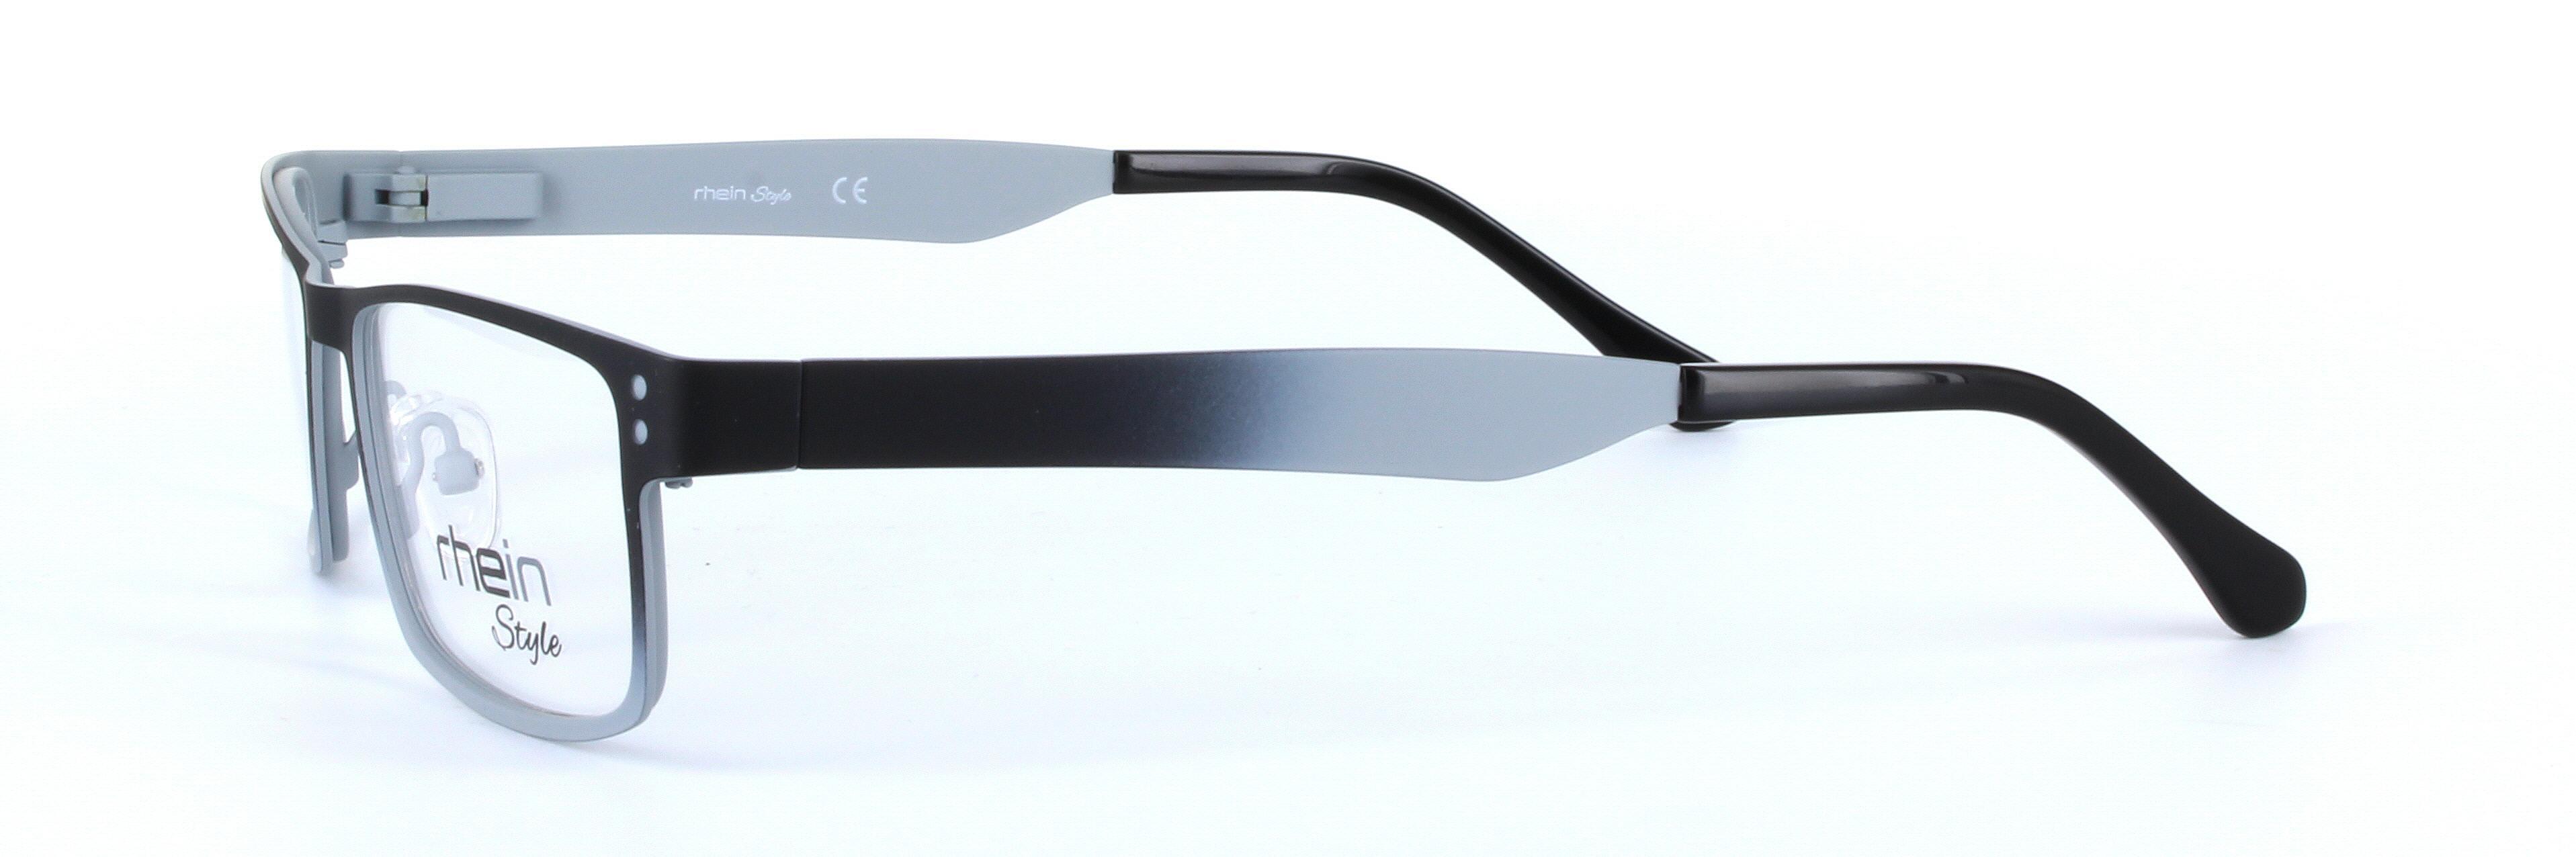 Ambleside Black and Silver Full Rim Rectangular Metal Glasses - Image View 2